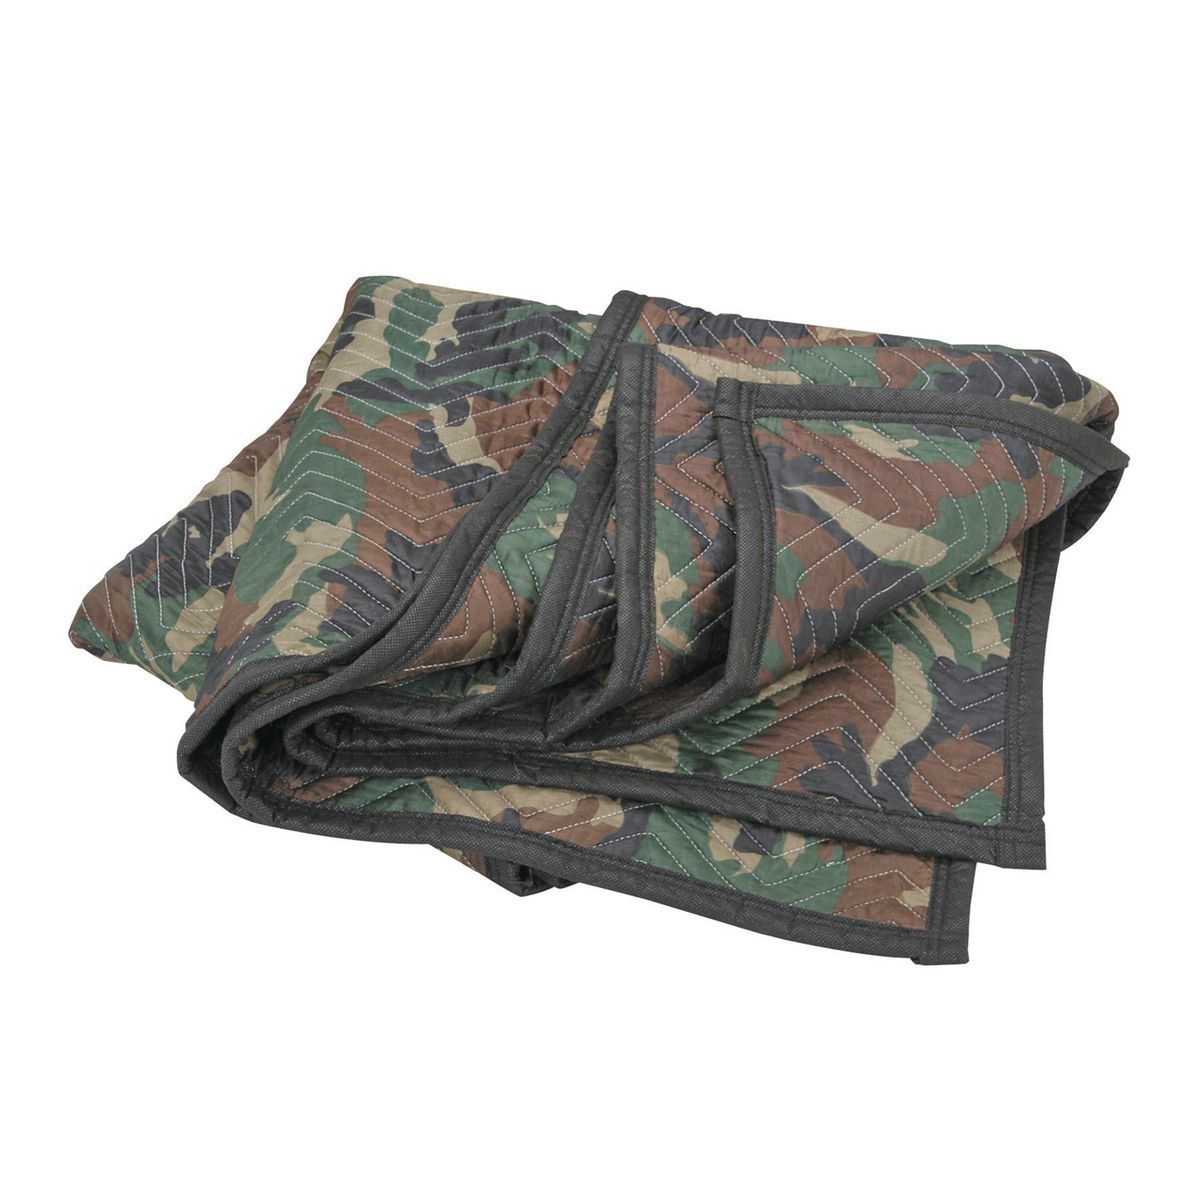 HAUL-MASTER 72" x 80" Camouflage Utility Blanket